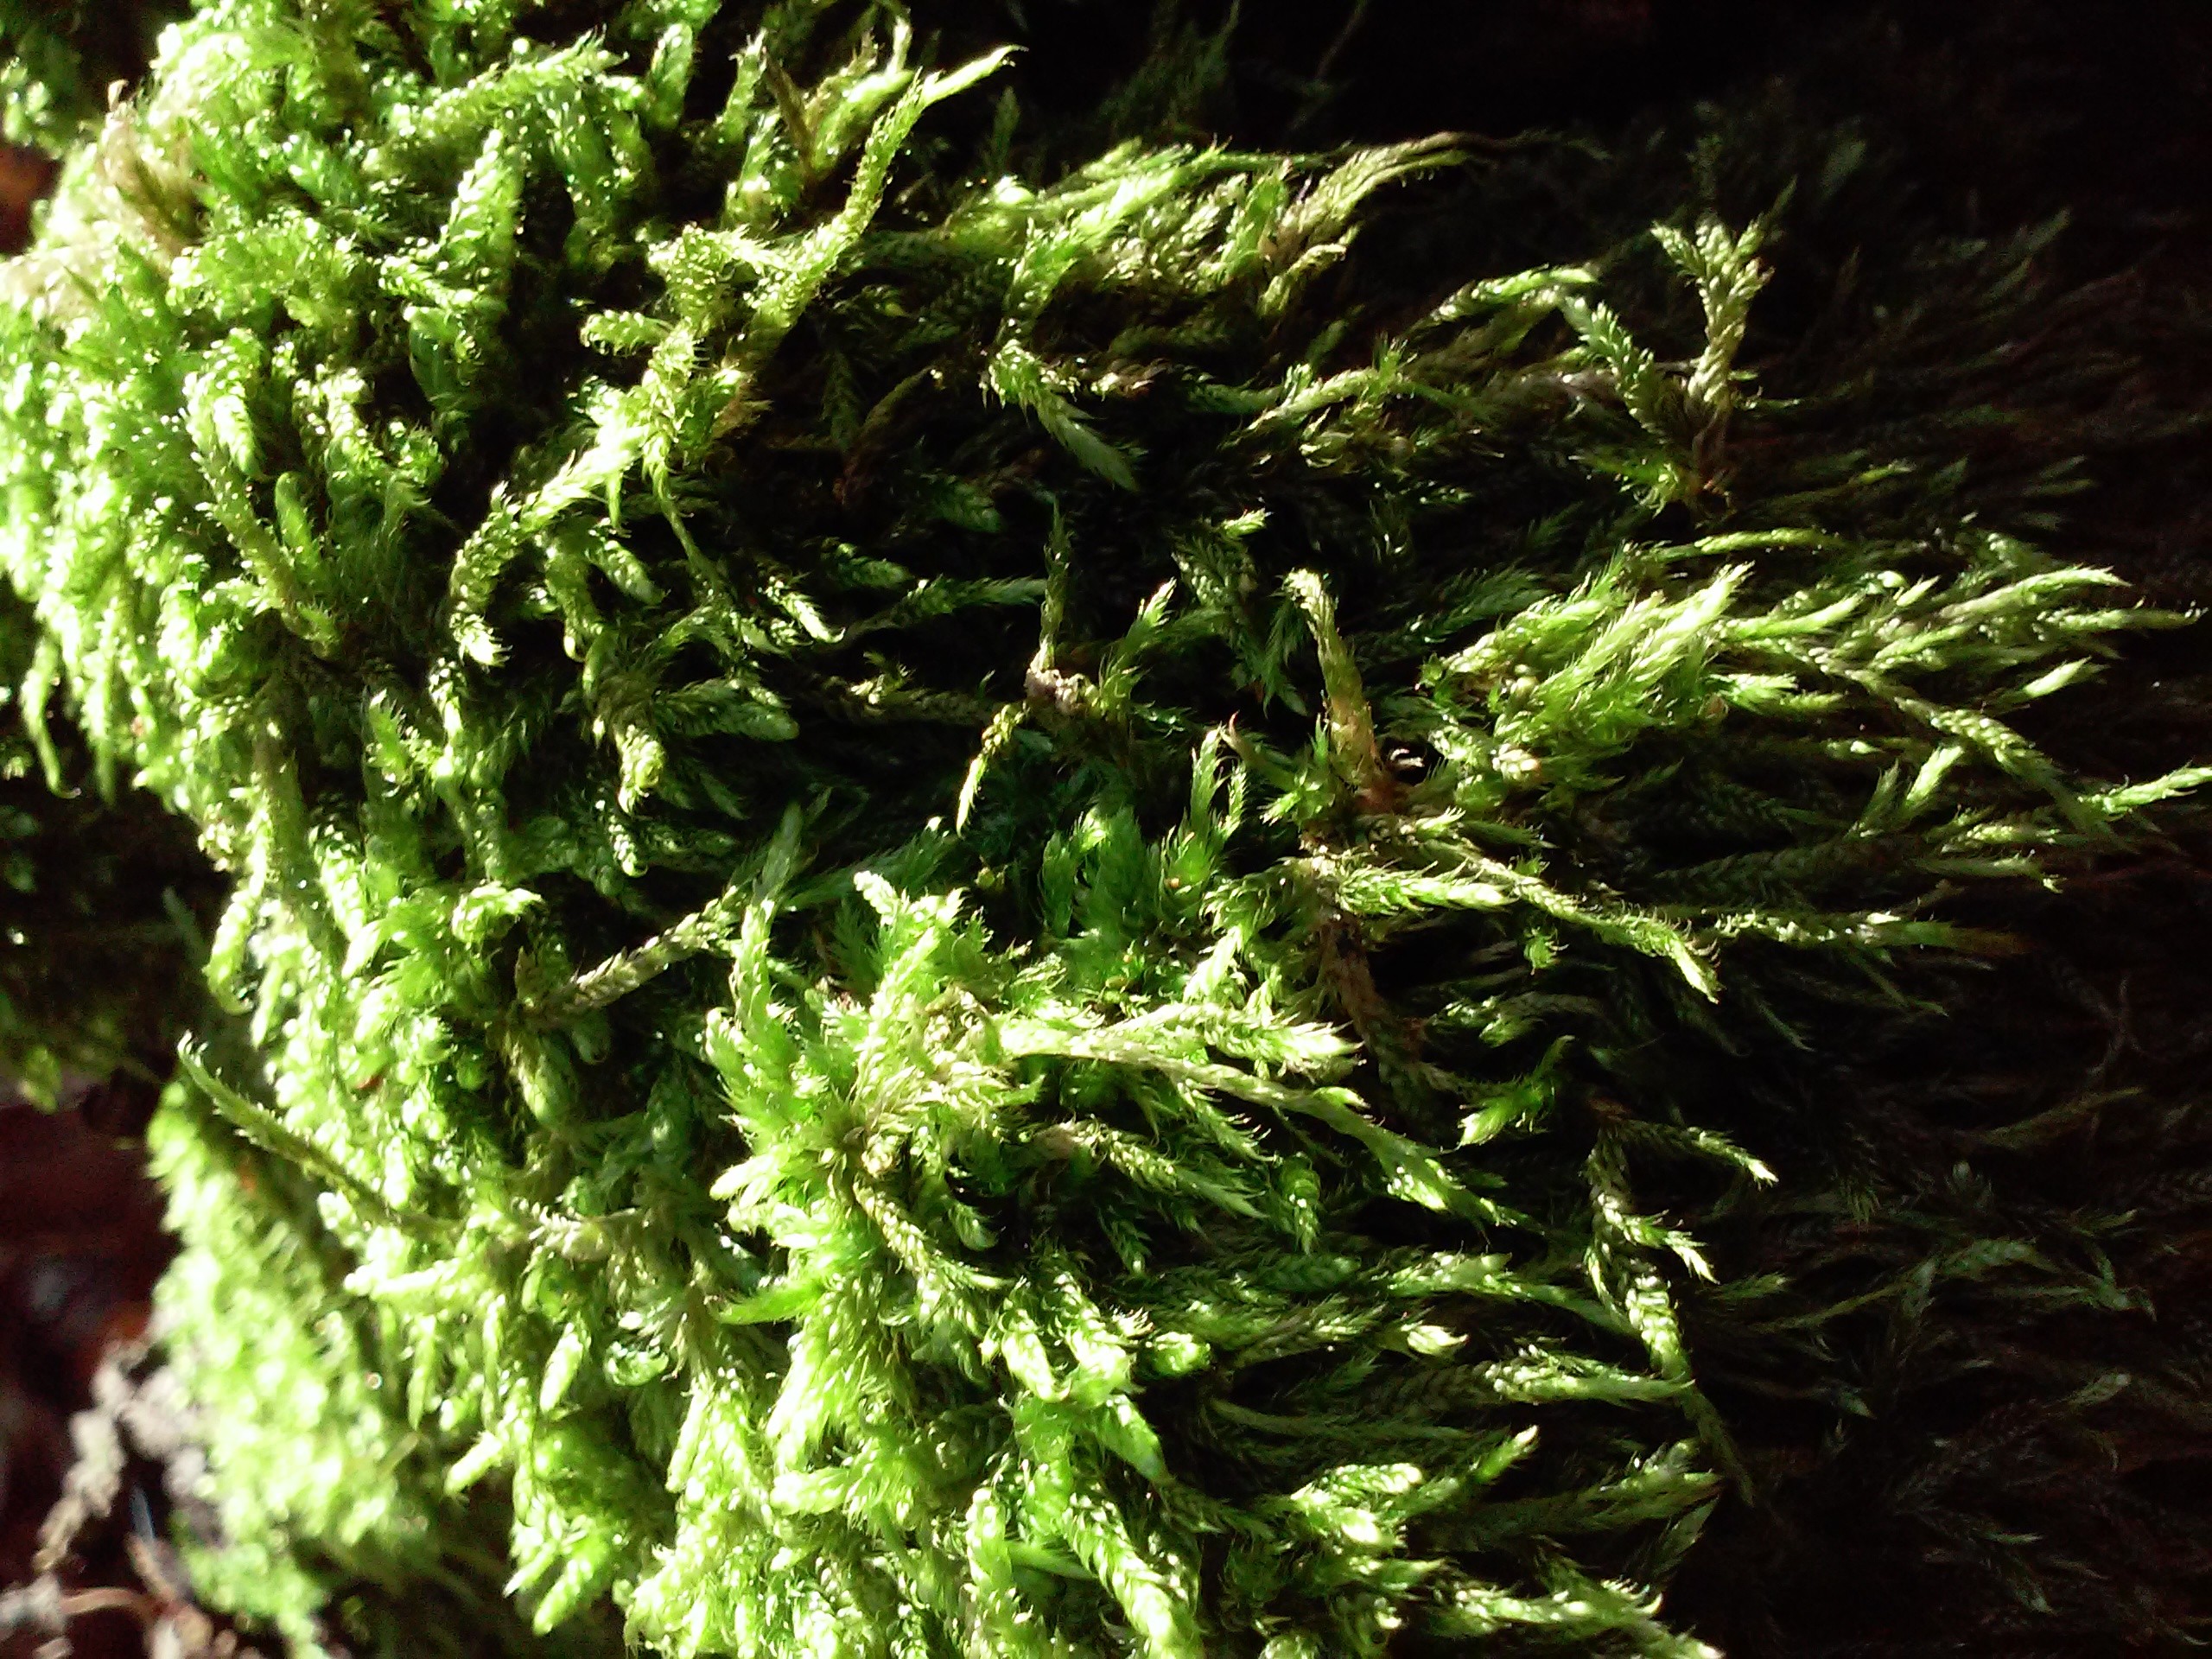 General 2560x1920 moss plants green